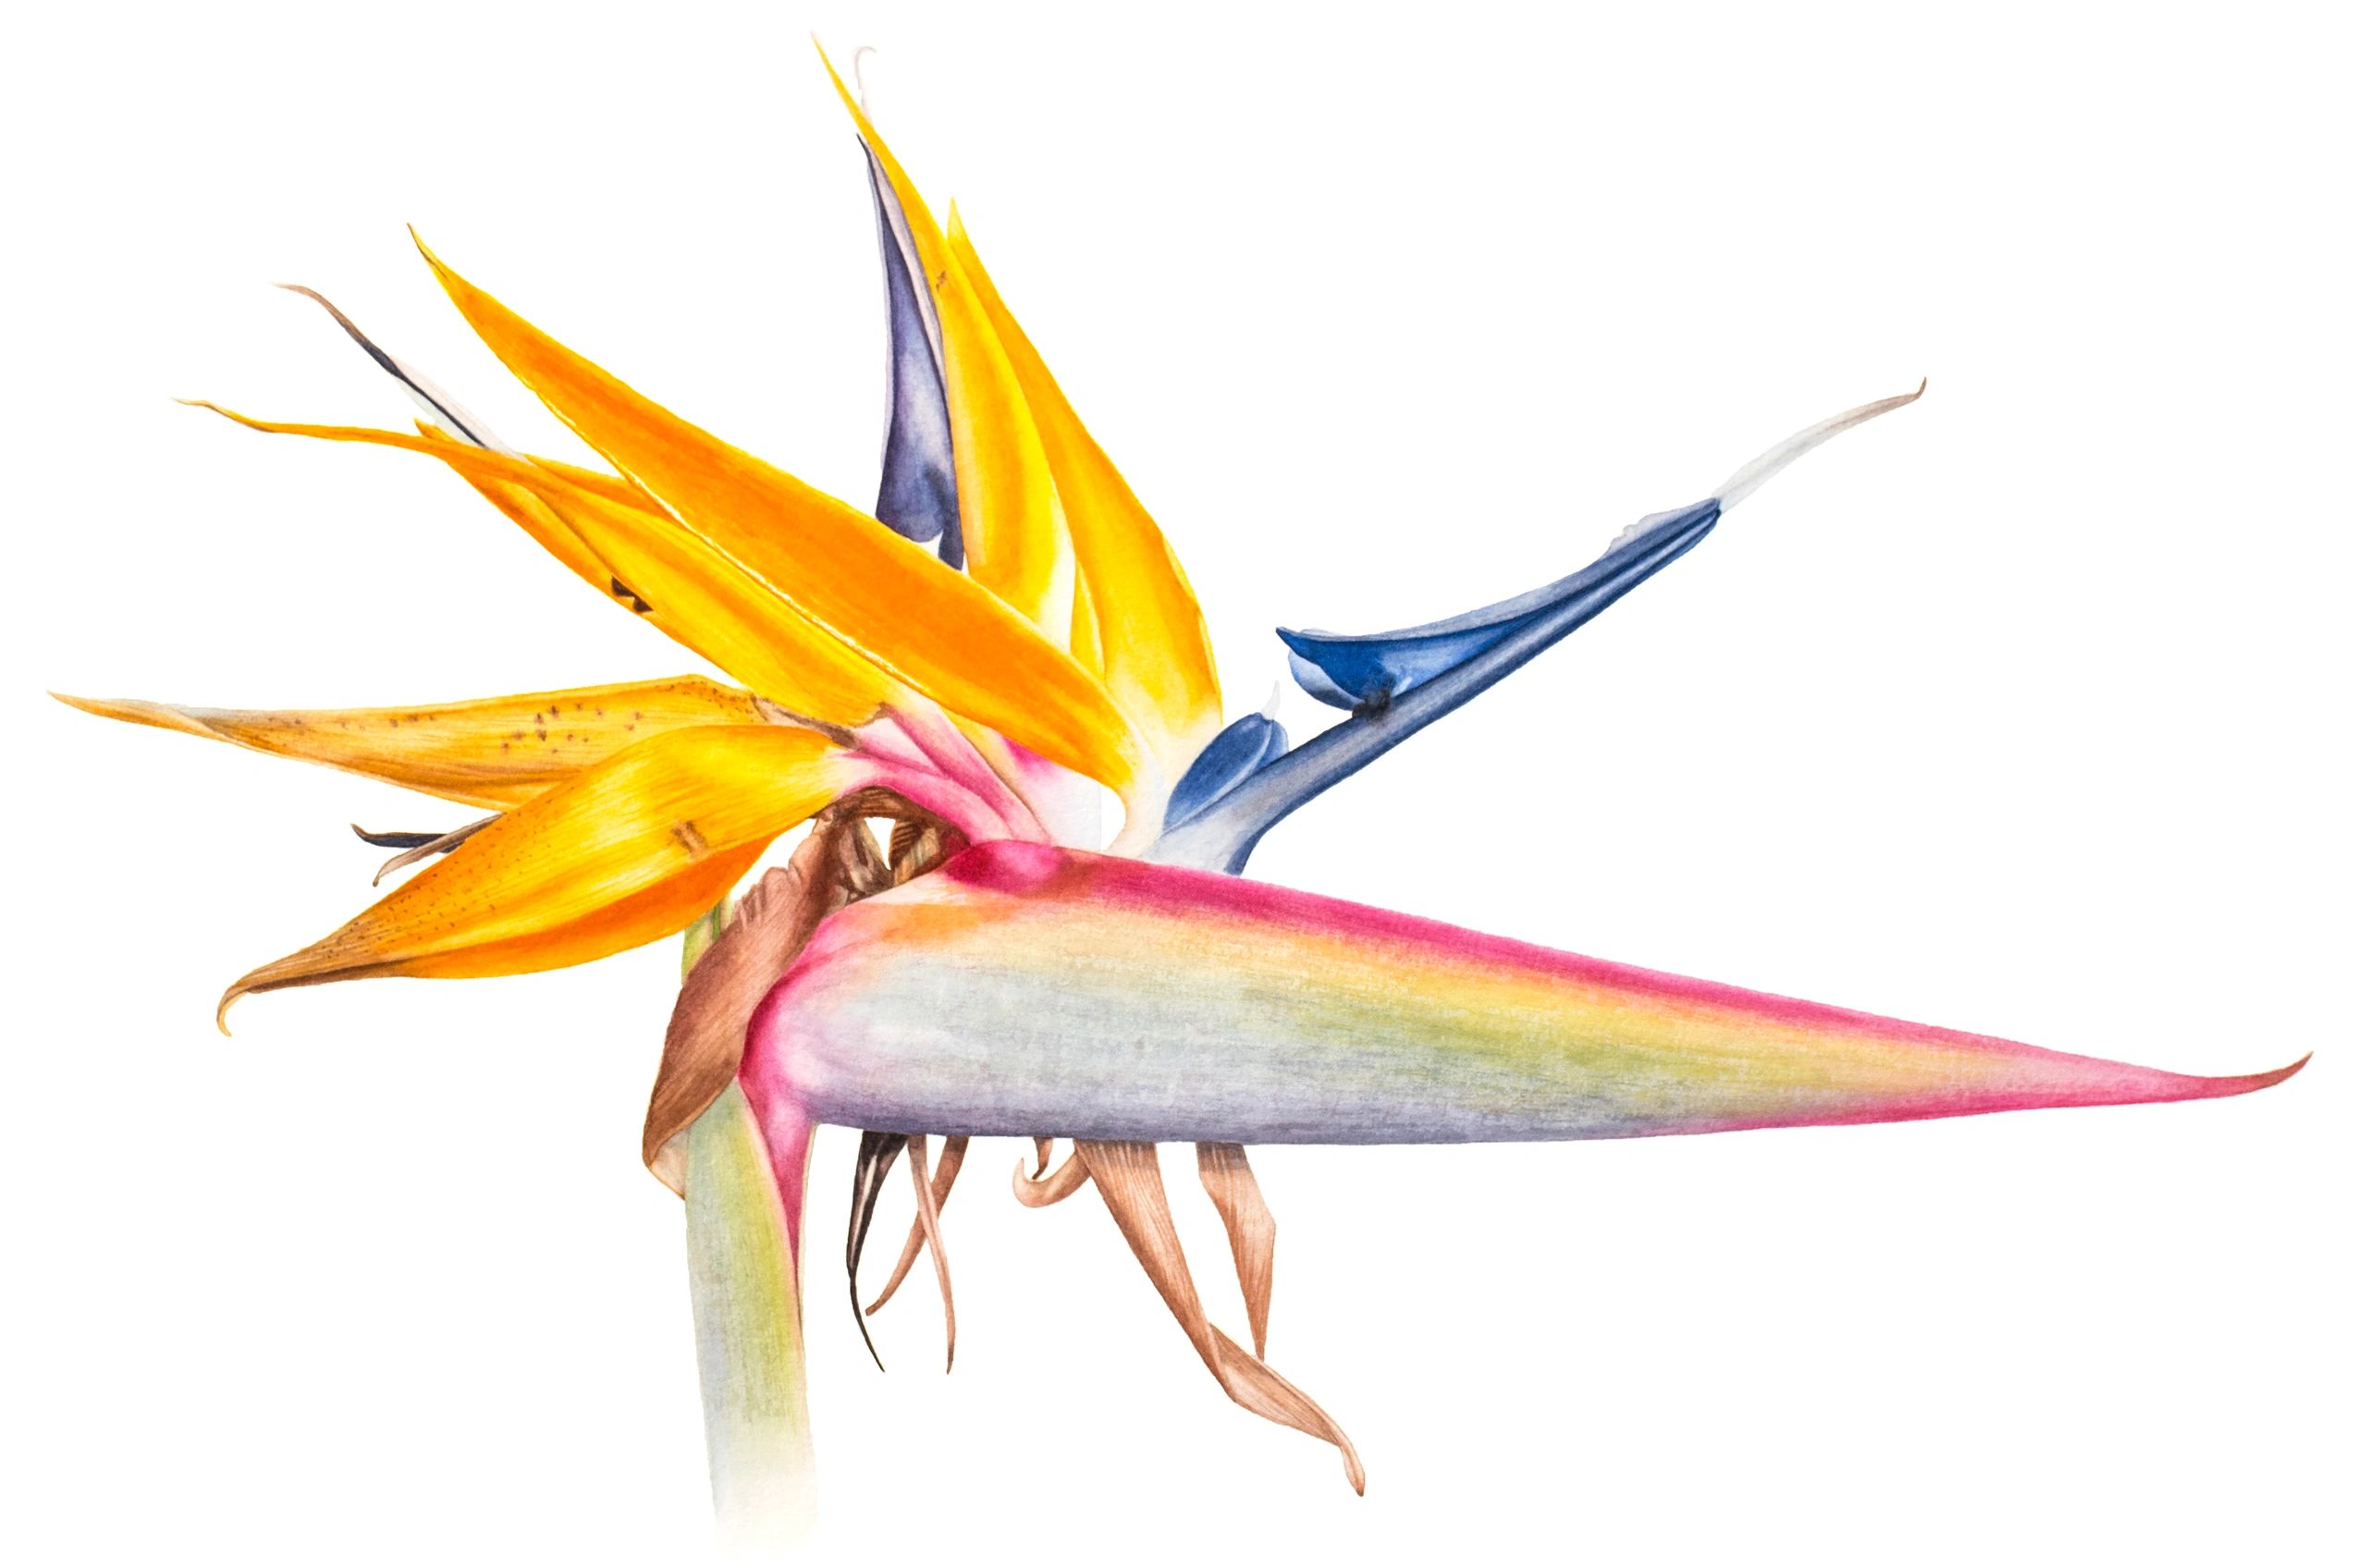 "BIRD OF PARADISE" Strelitzia x reginae, Watercolor on paper 15" X 21" © 2018
